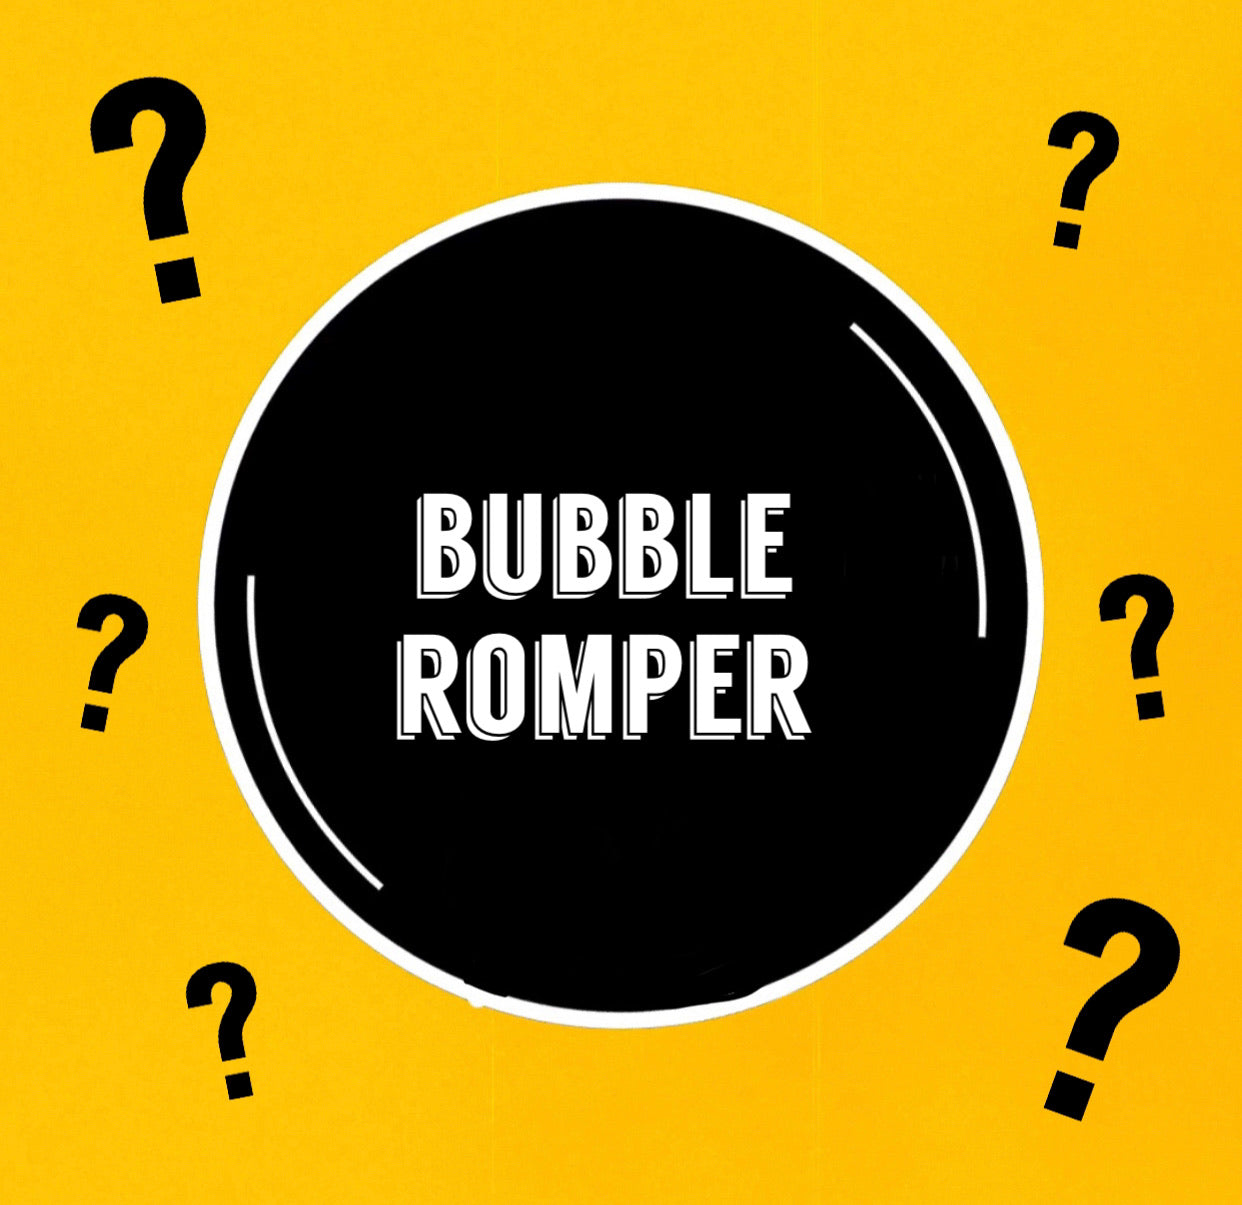 MYSTERY MONDAY | Bubble romper